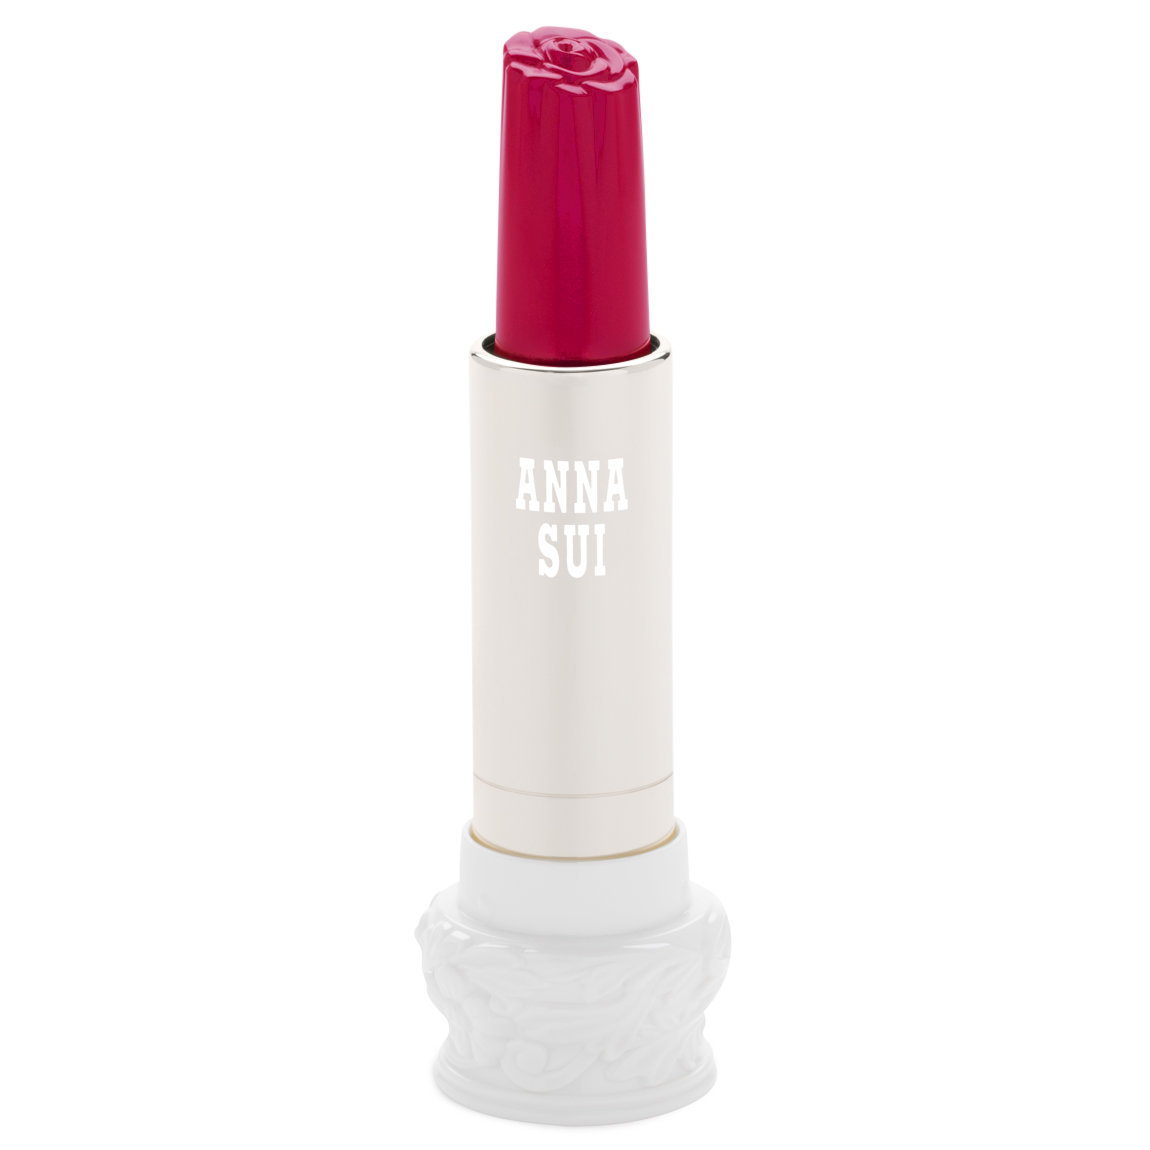 Anna Sui Limited Edition Lipstick S S403 alternative view 1.